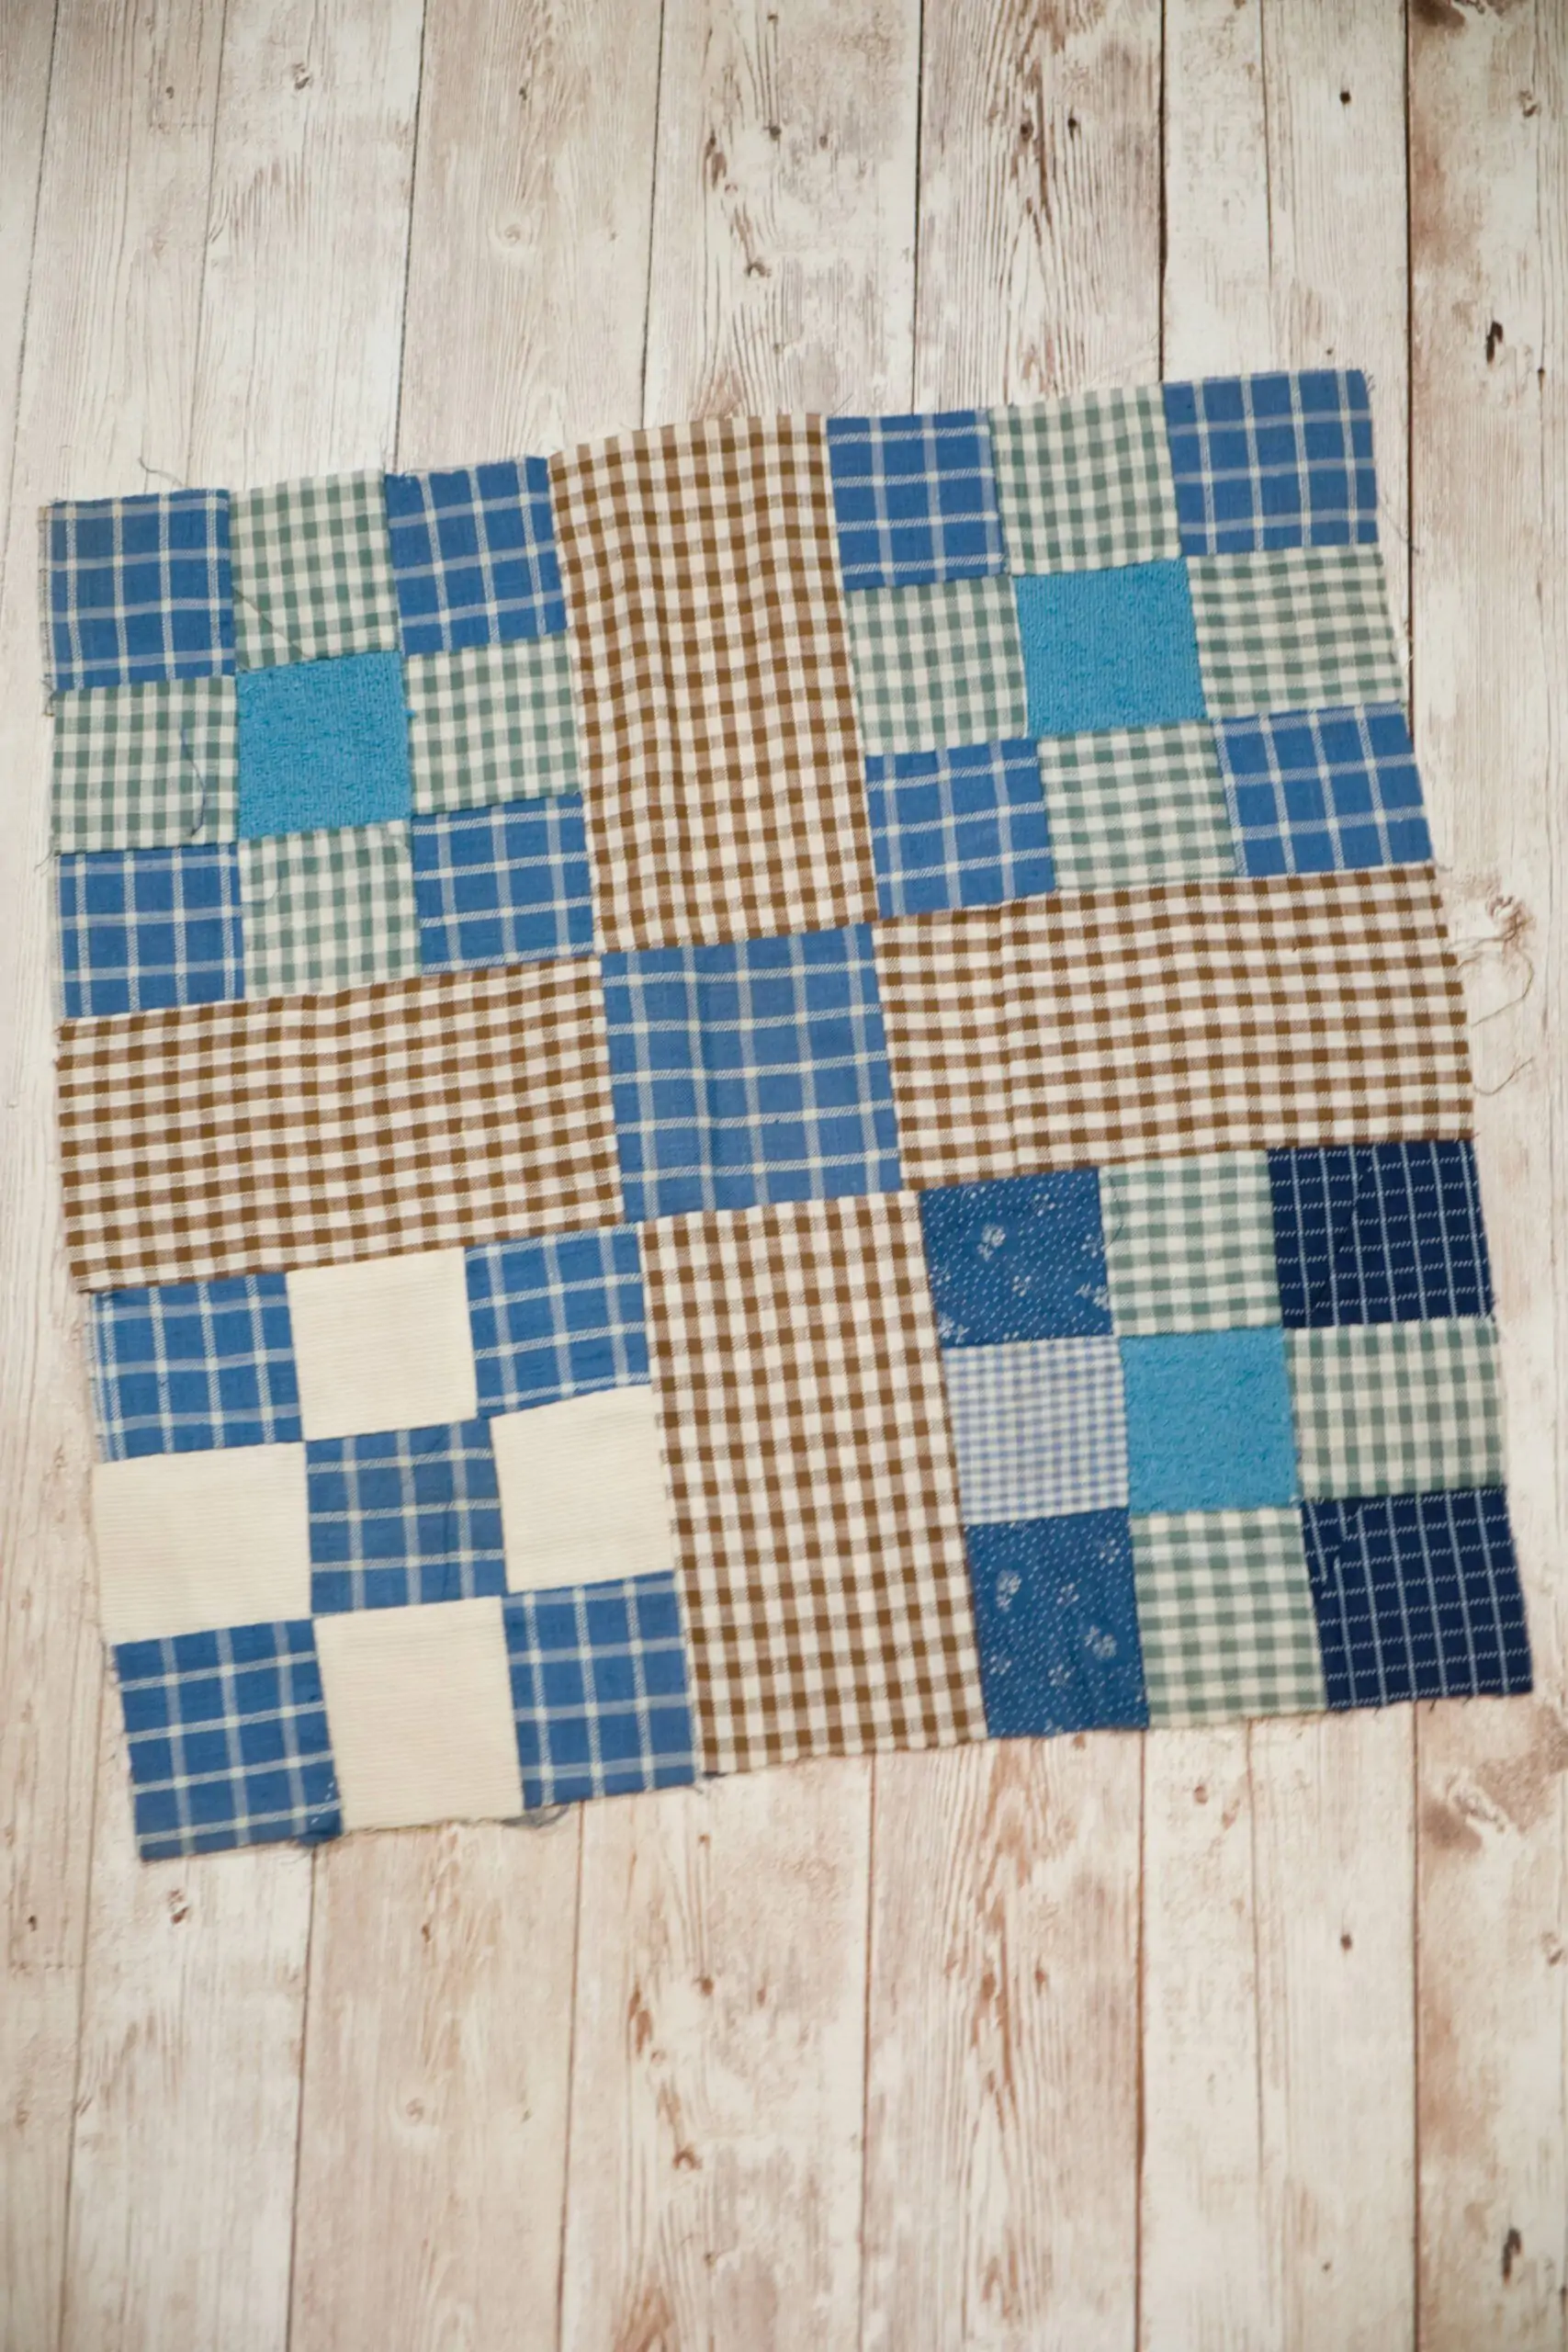 Vintage Quilt Block with Nine-Patch